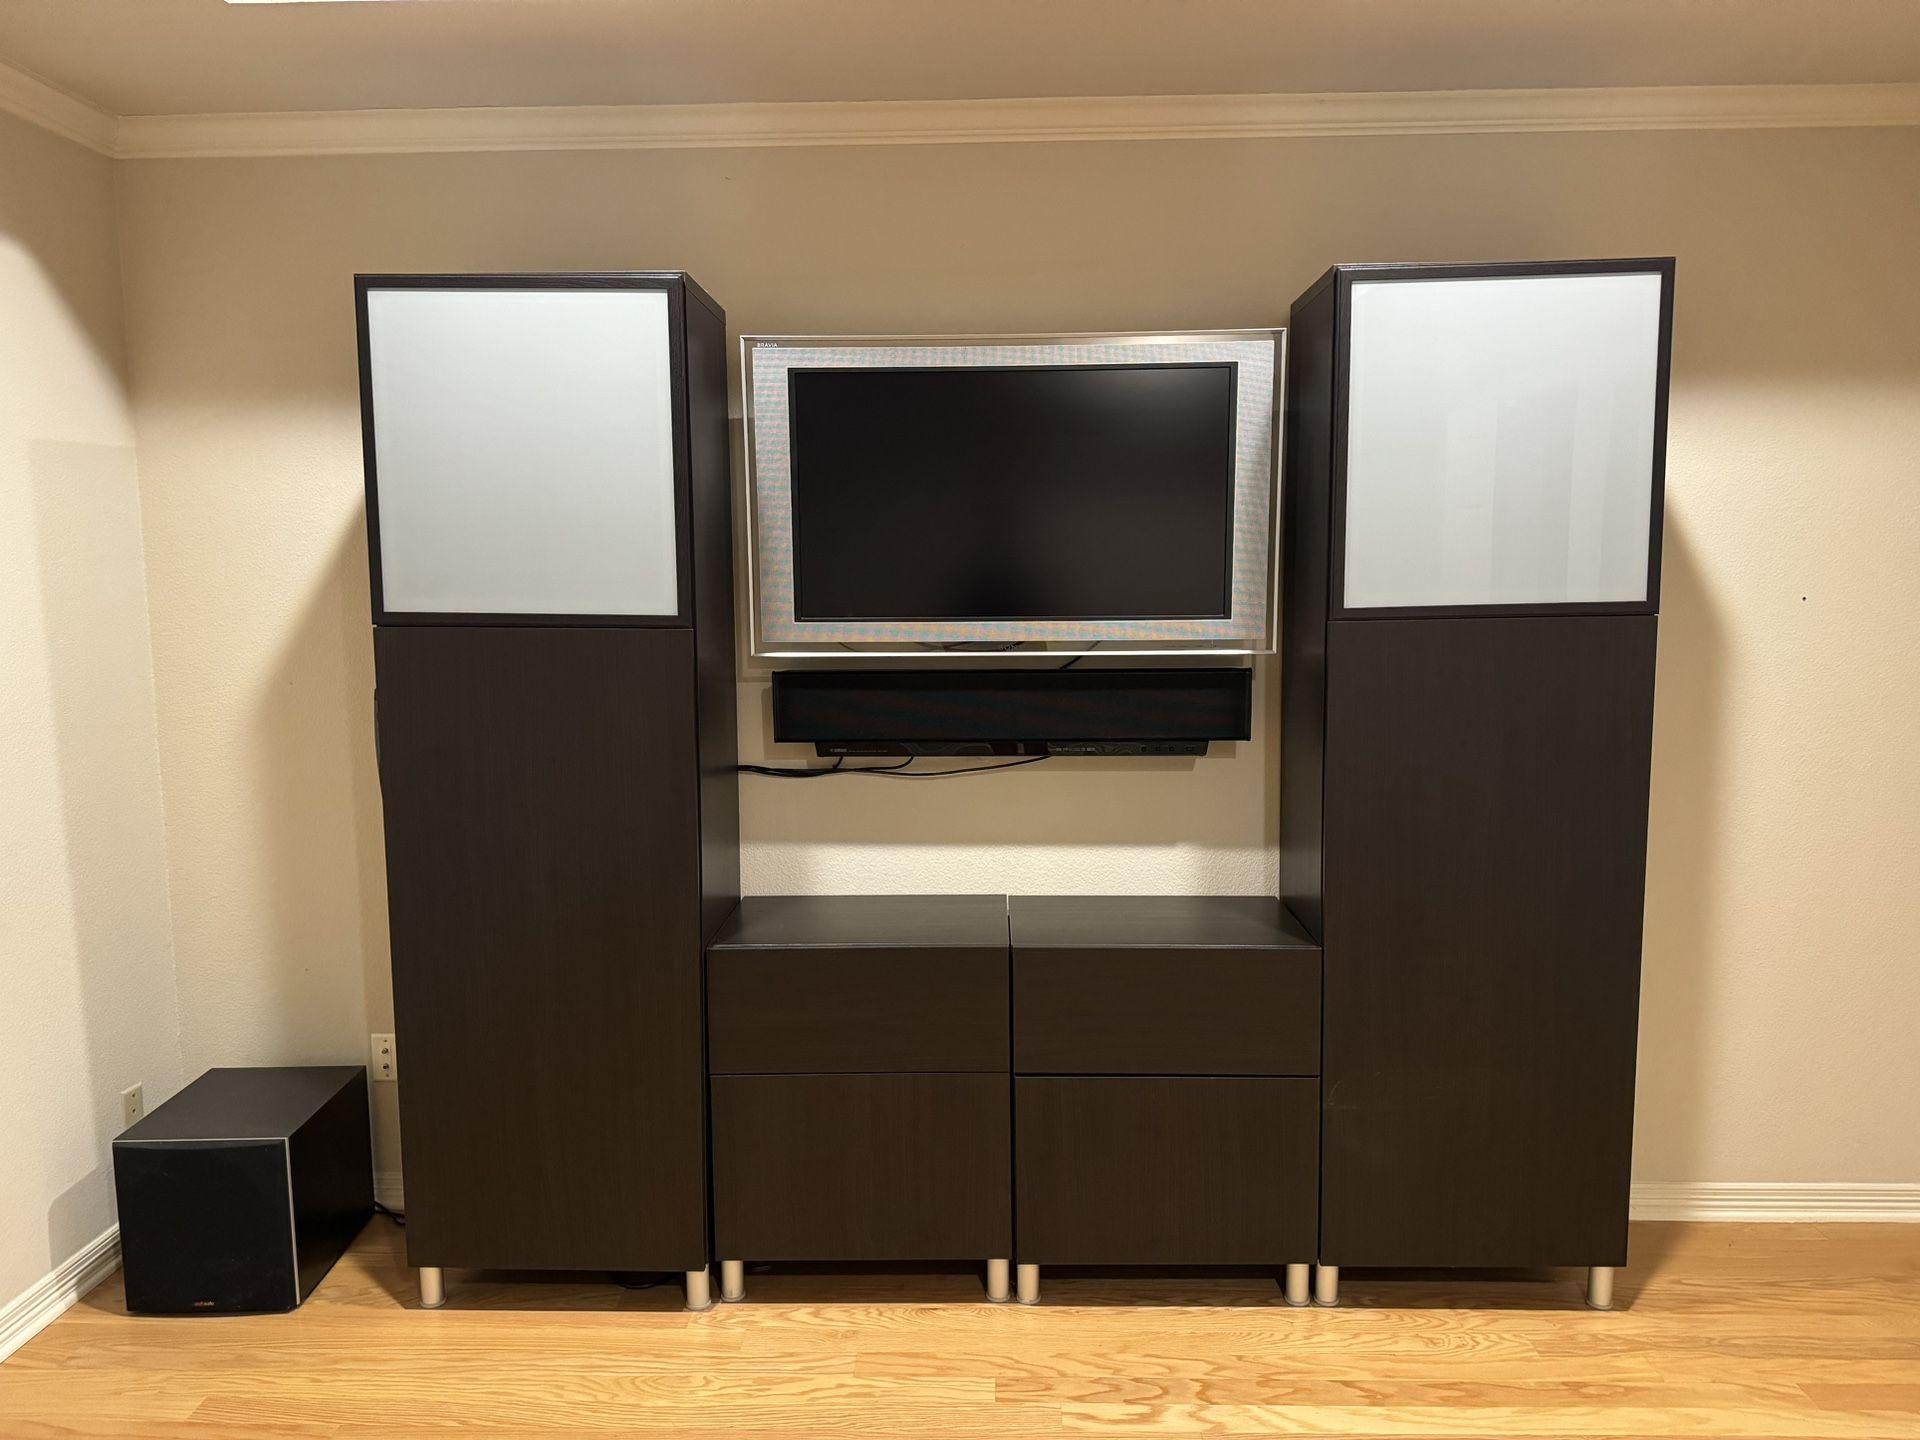 2 IKEA Black-Brown Tall Storage Cabinets